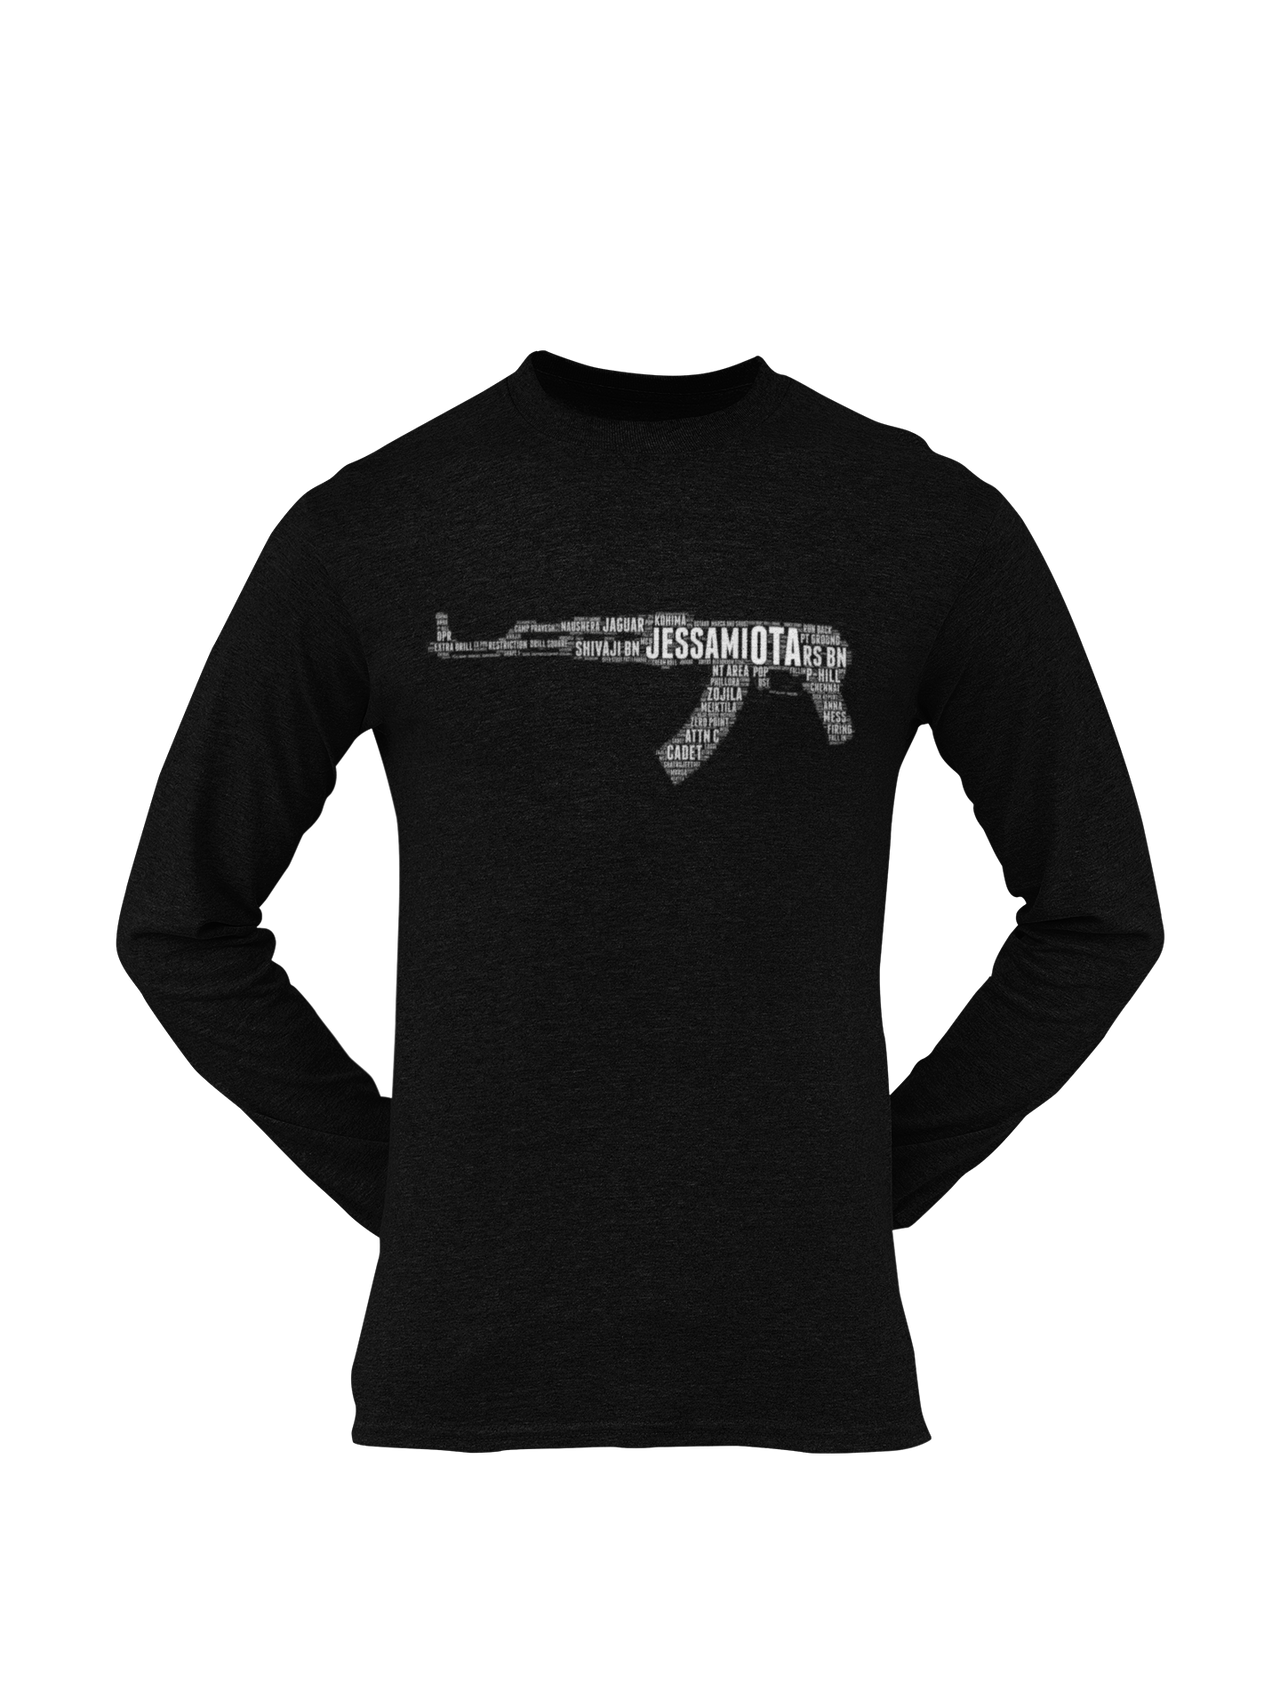 OTA T-shirt - Word Cloud Jessami - AK-47 Folding Stock (Men)